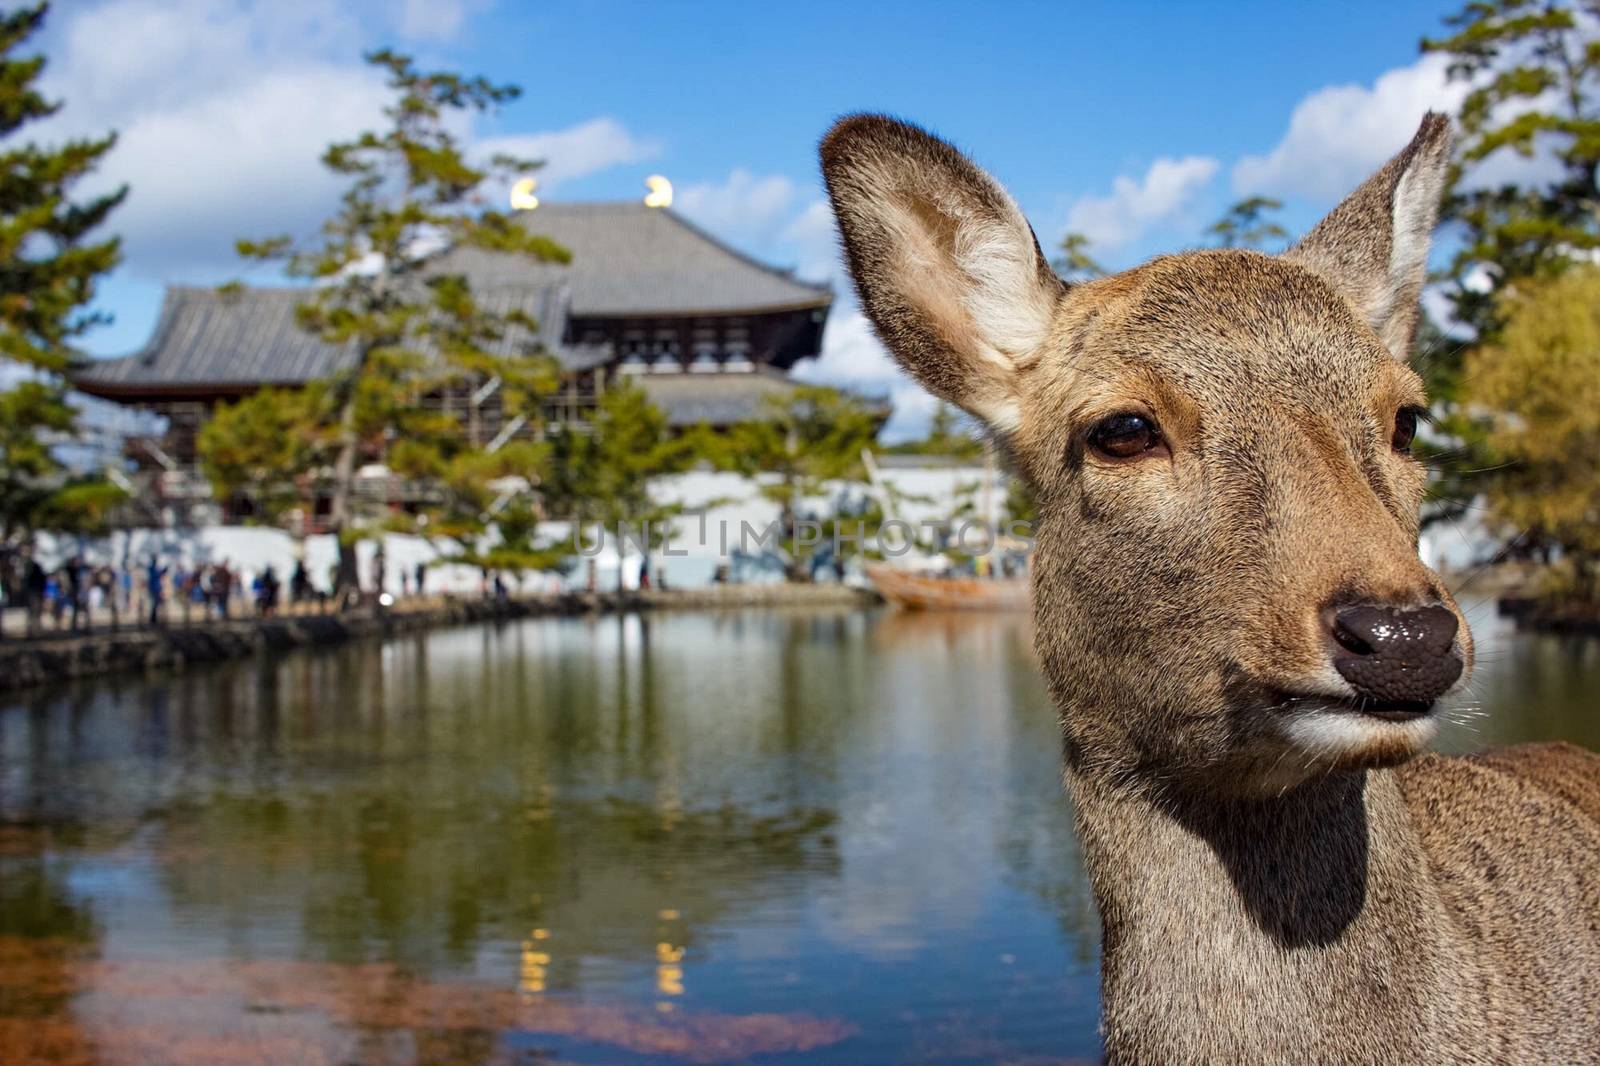 Deer in Nara park, Japan. by blueandrew8000@hotmail.com